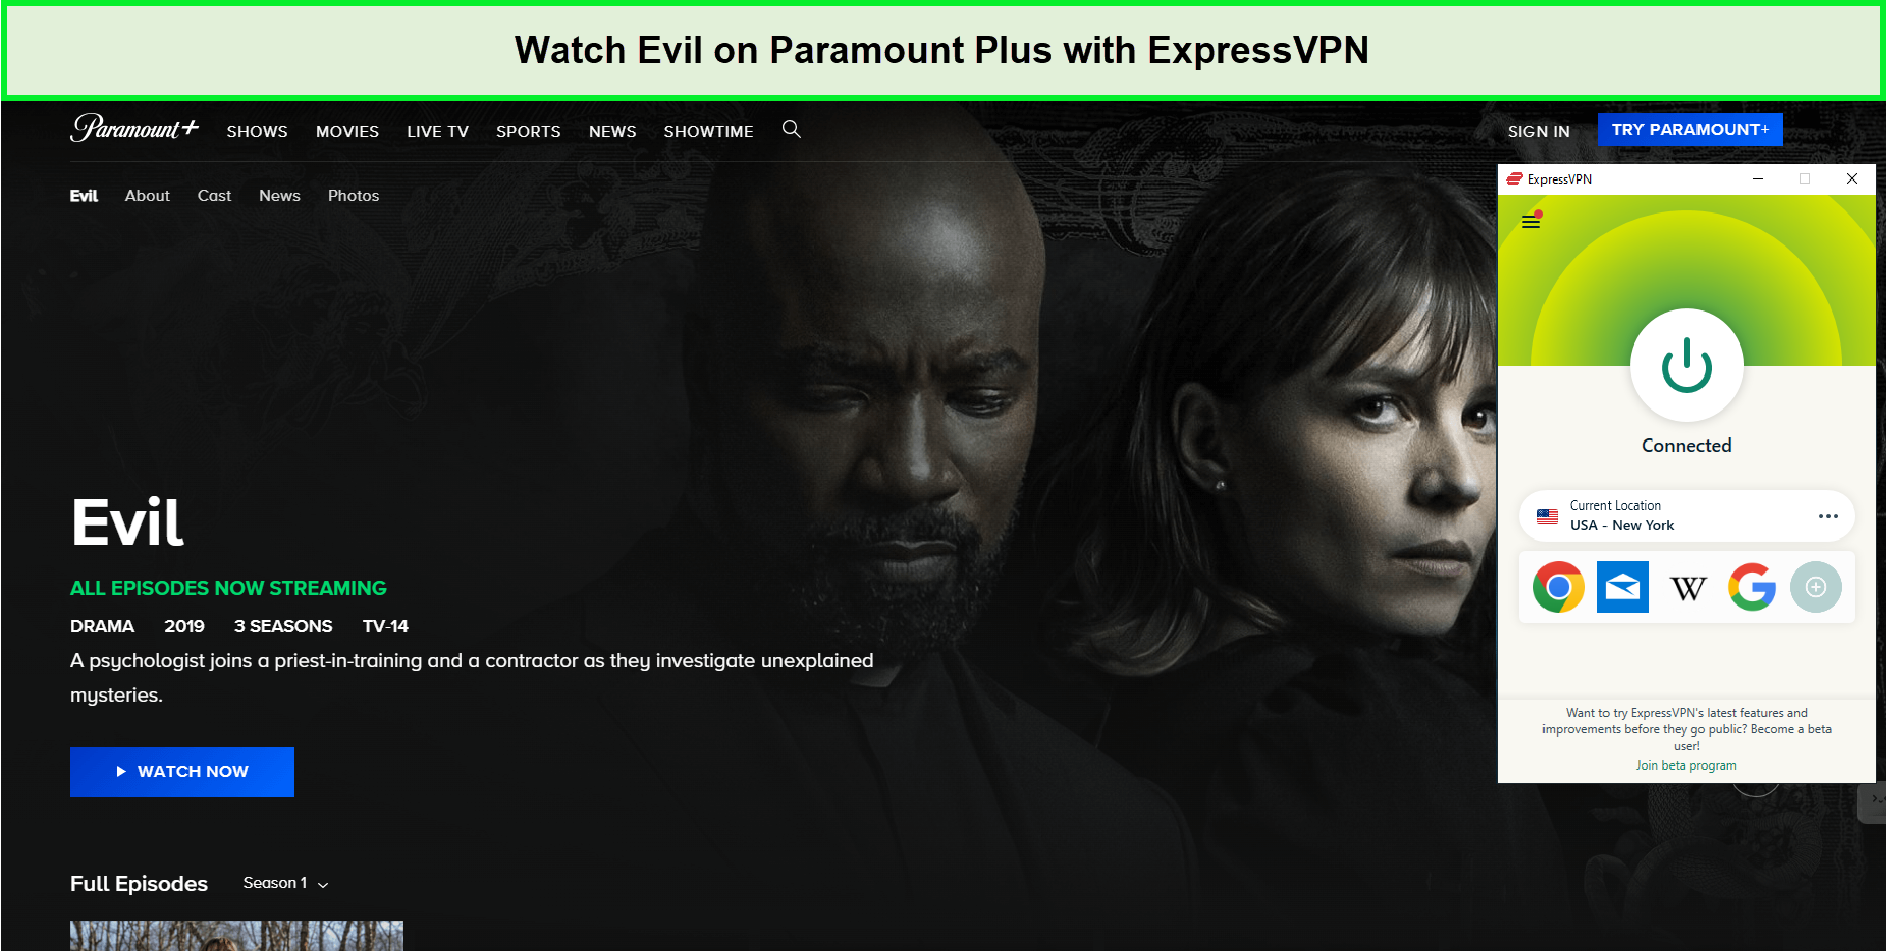 Watch-Evil-Season-4-in-Hong Kong-on-Paramount-Plus-with-ExpressVPN